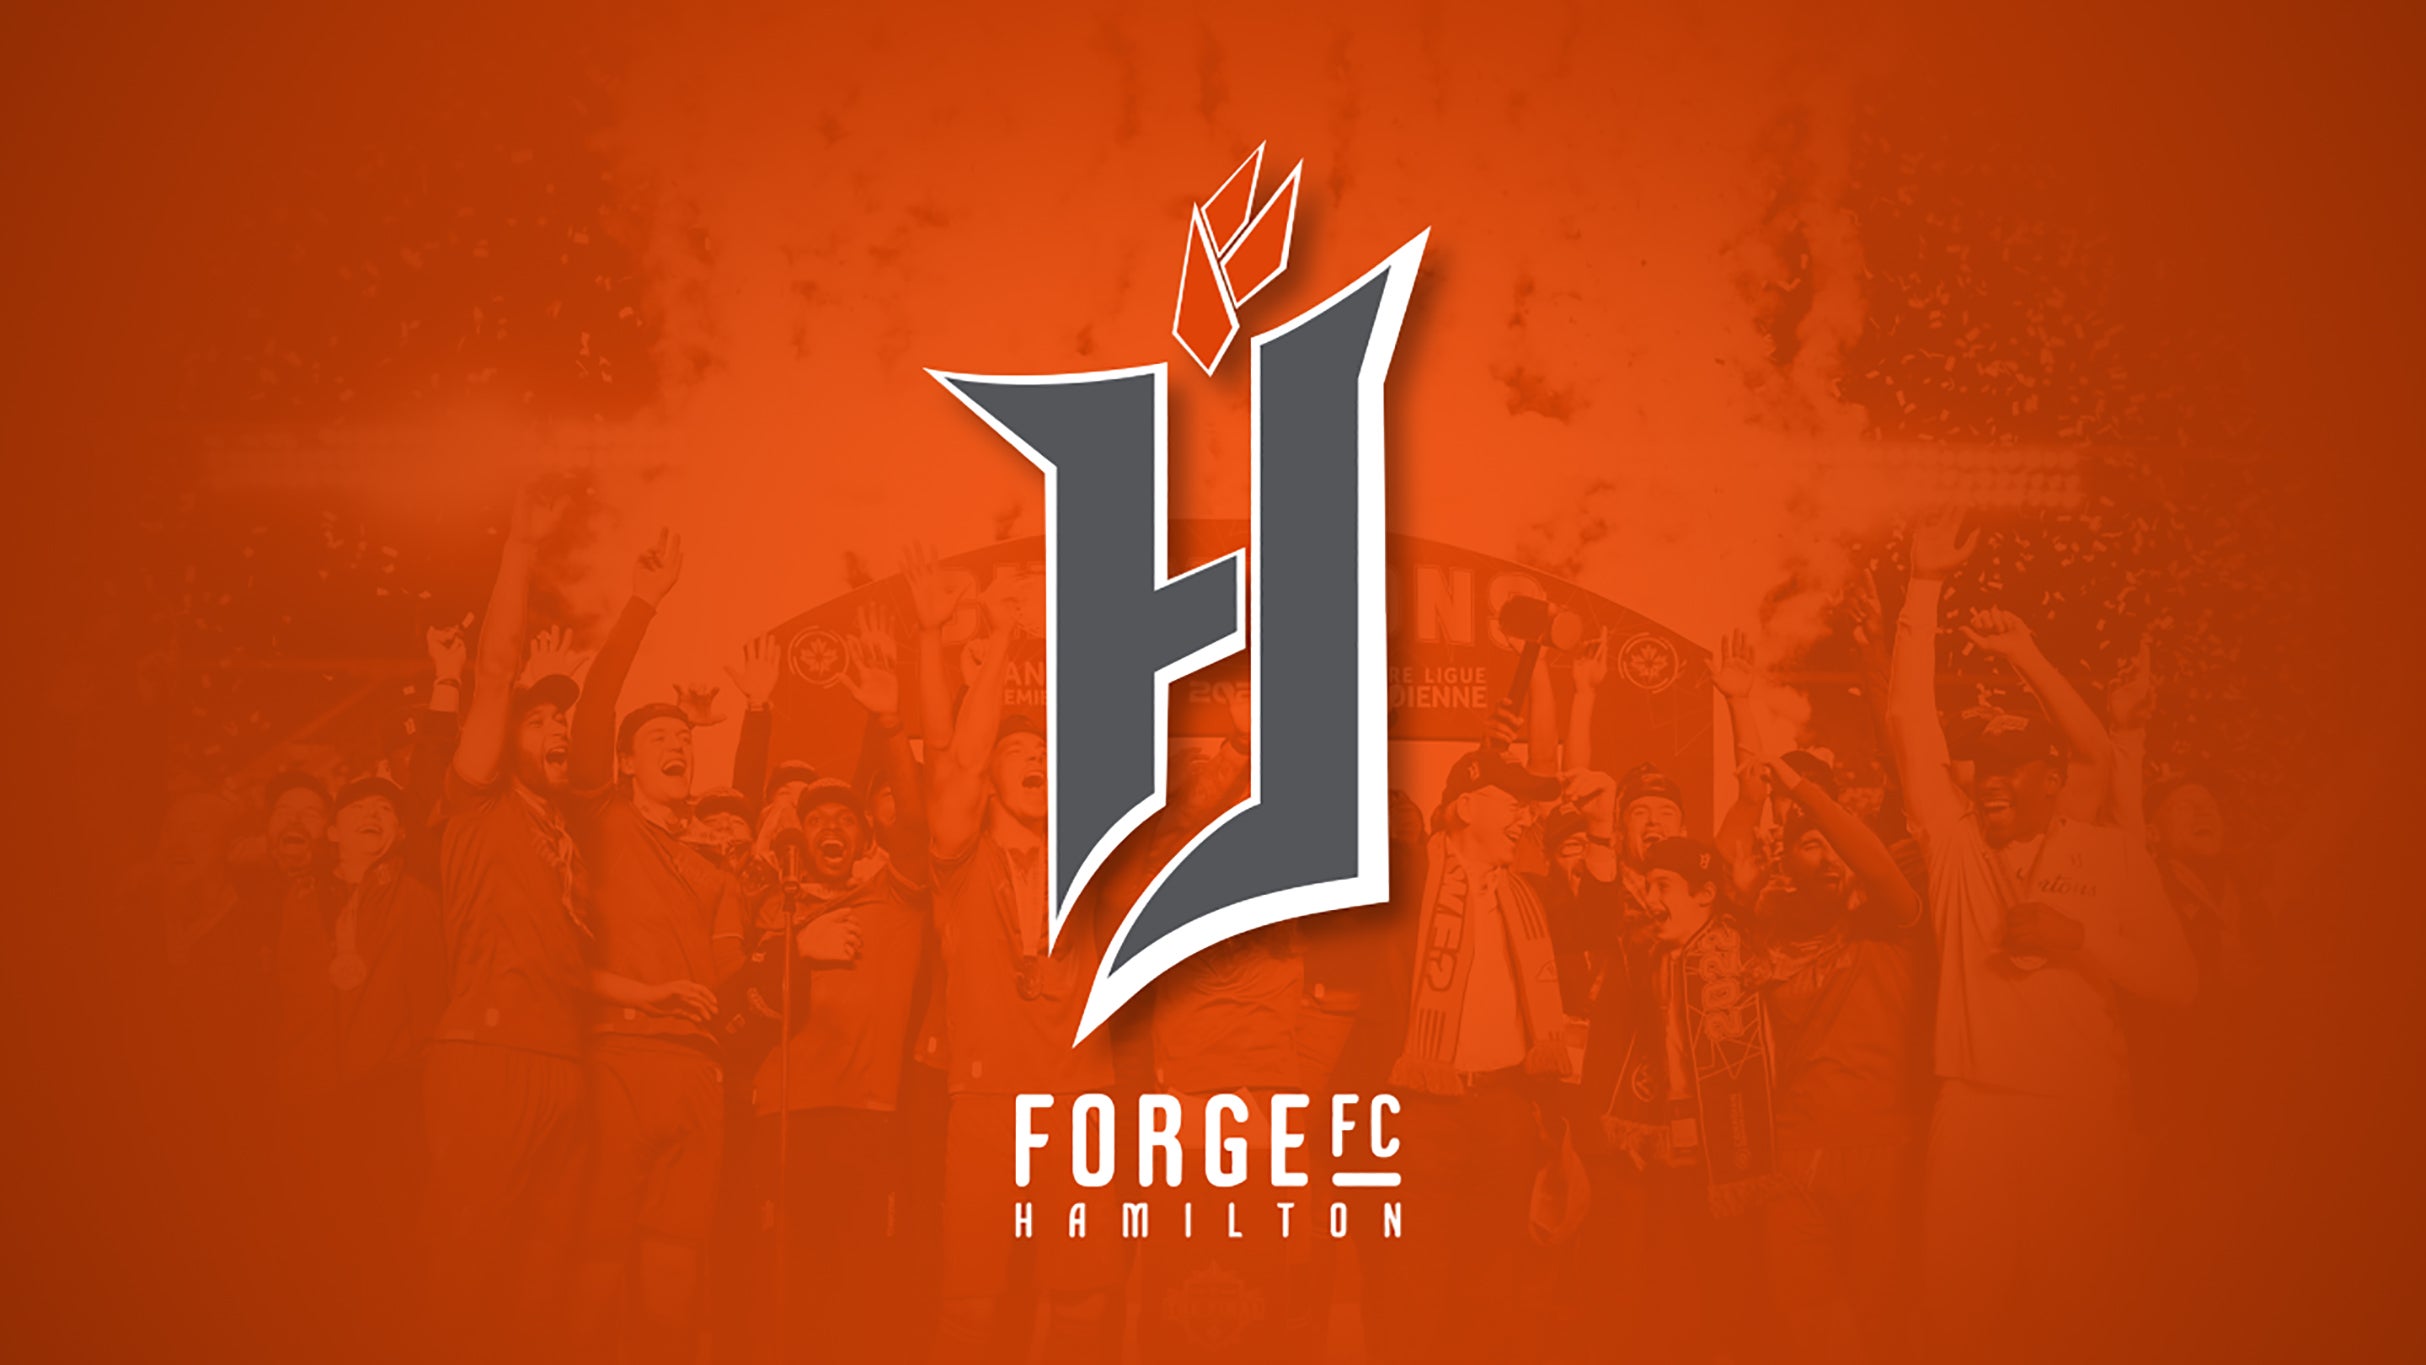 Forge FC vs. Vancouver FC in Hamilton promo photo for Westjet Rewards  presale offer code